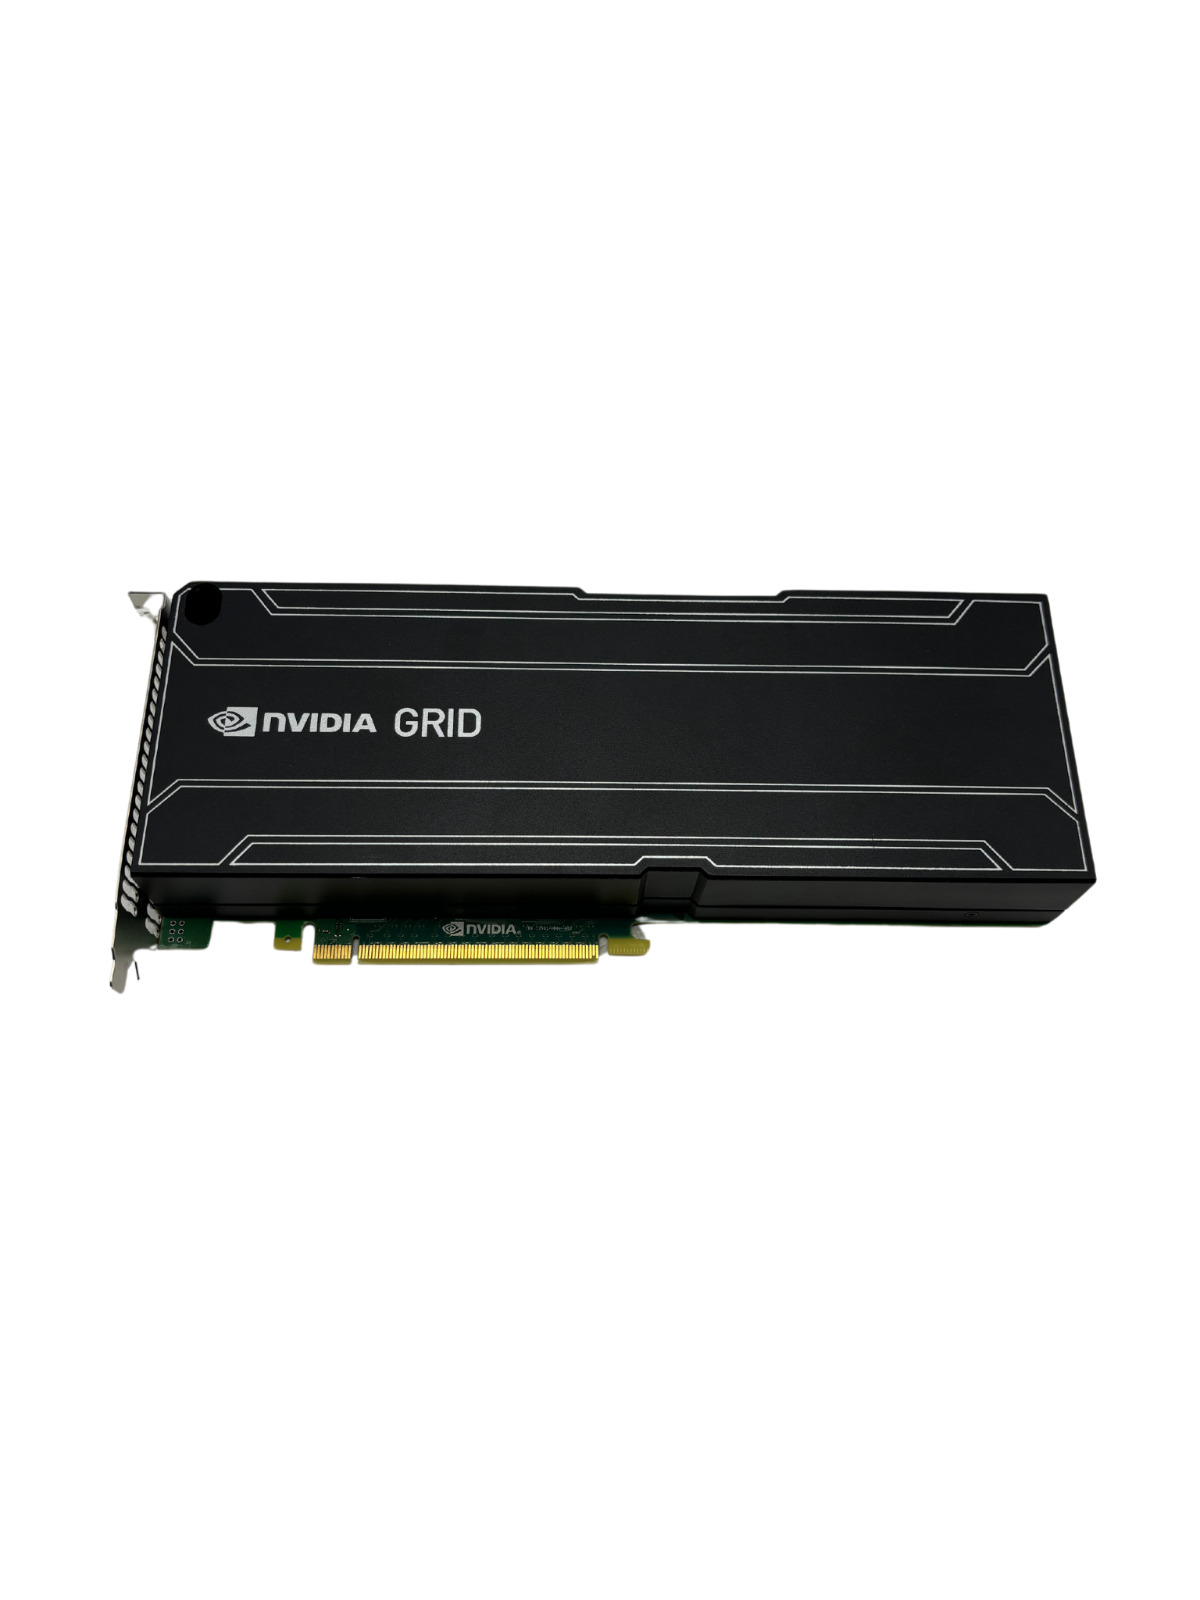 Cisco UCSC-GPU-VGXK1 Nvidia Grid K1 16Gb GDDR3 PCIe GPU Graphics Card